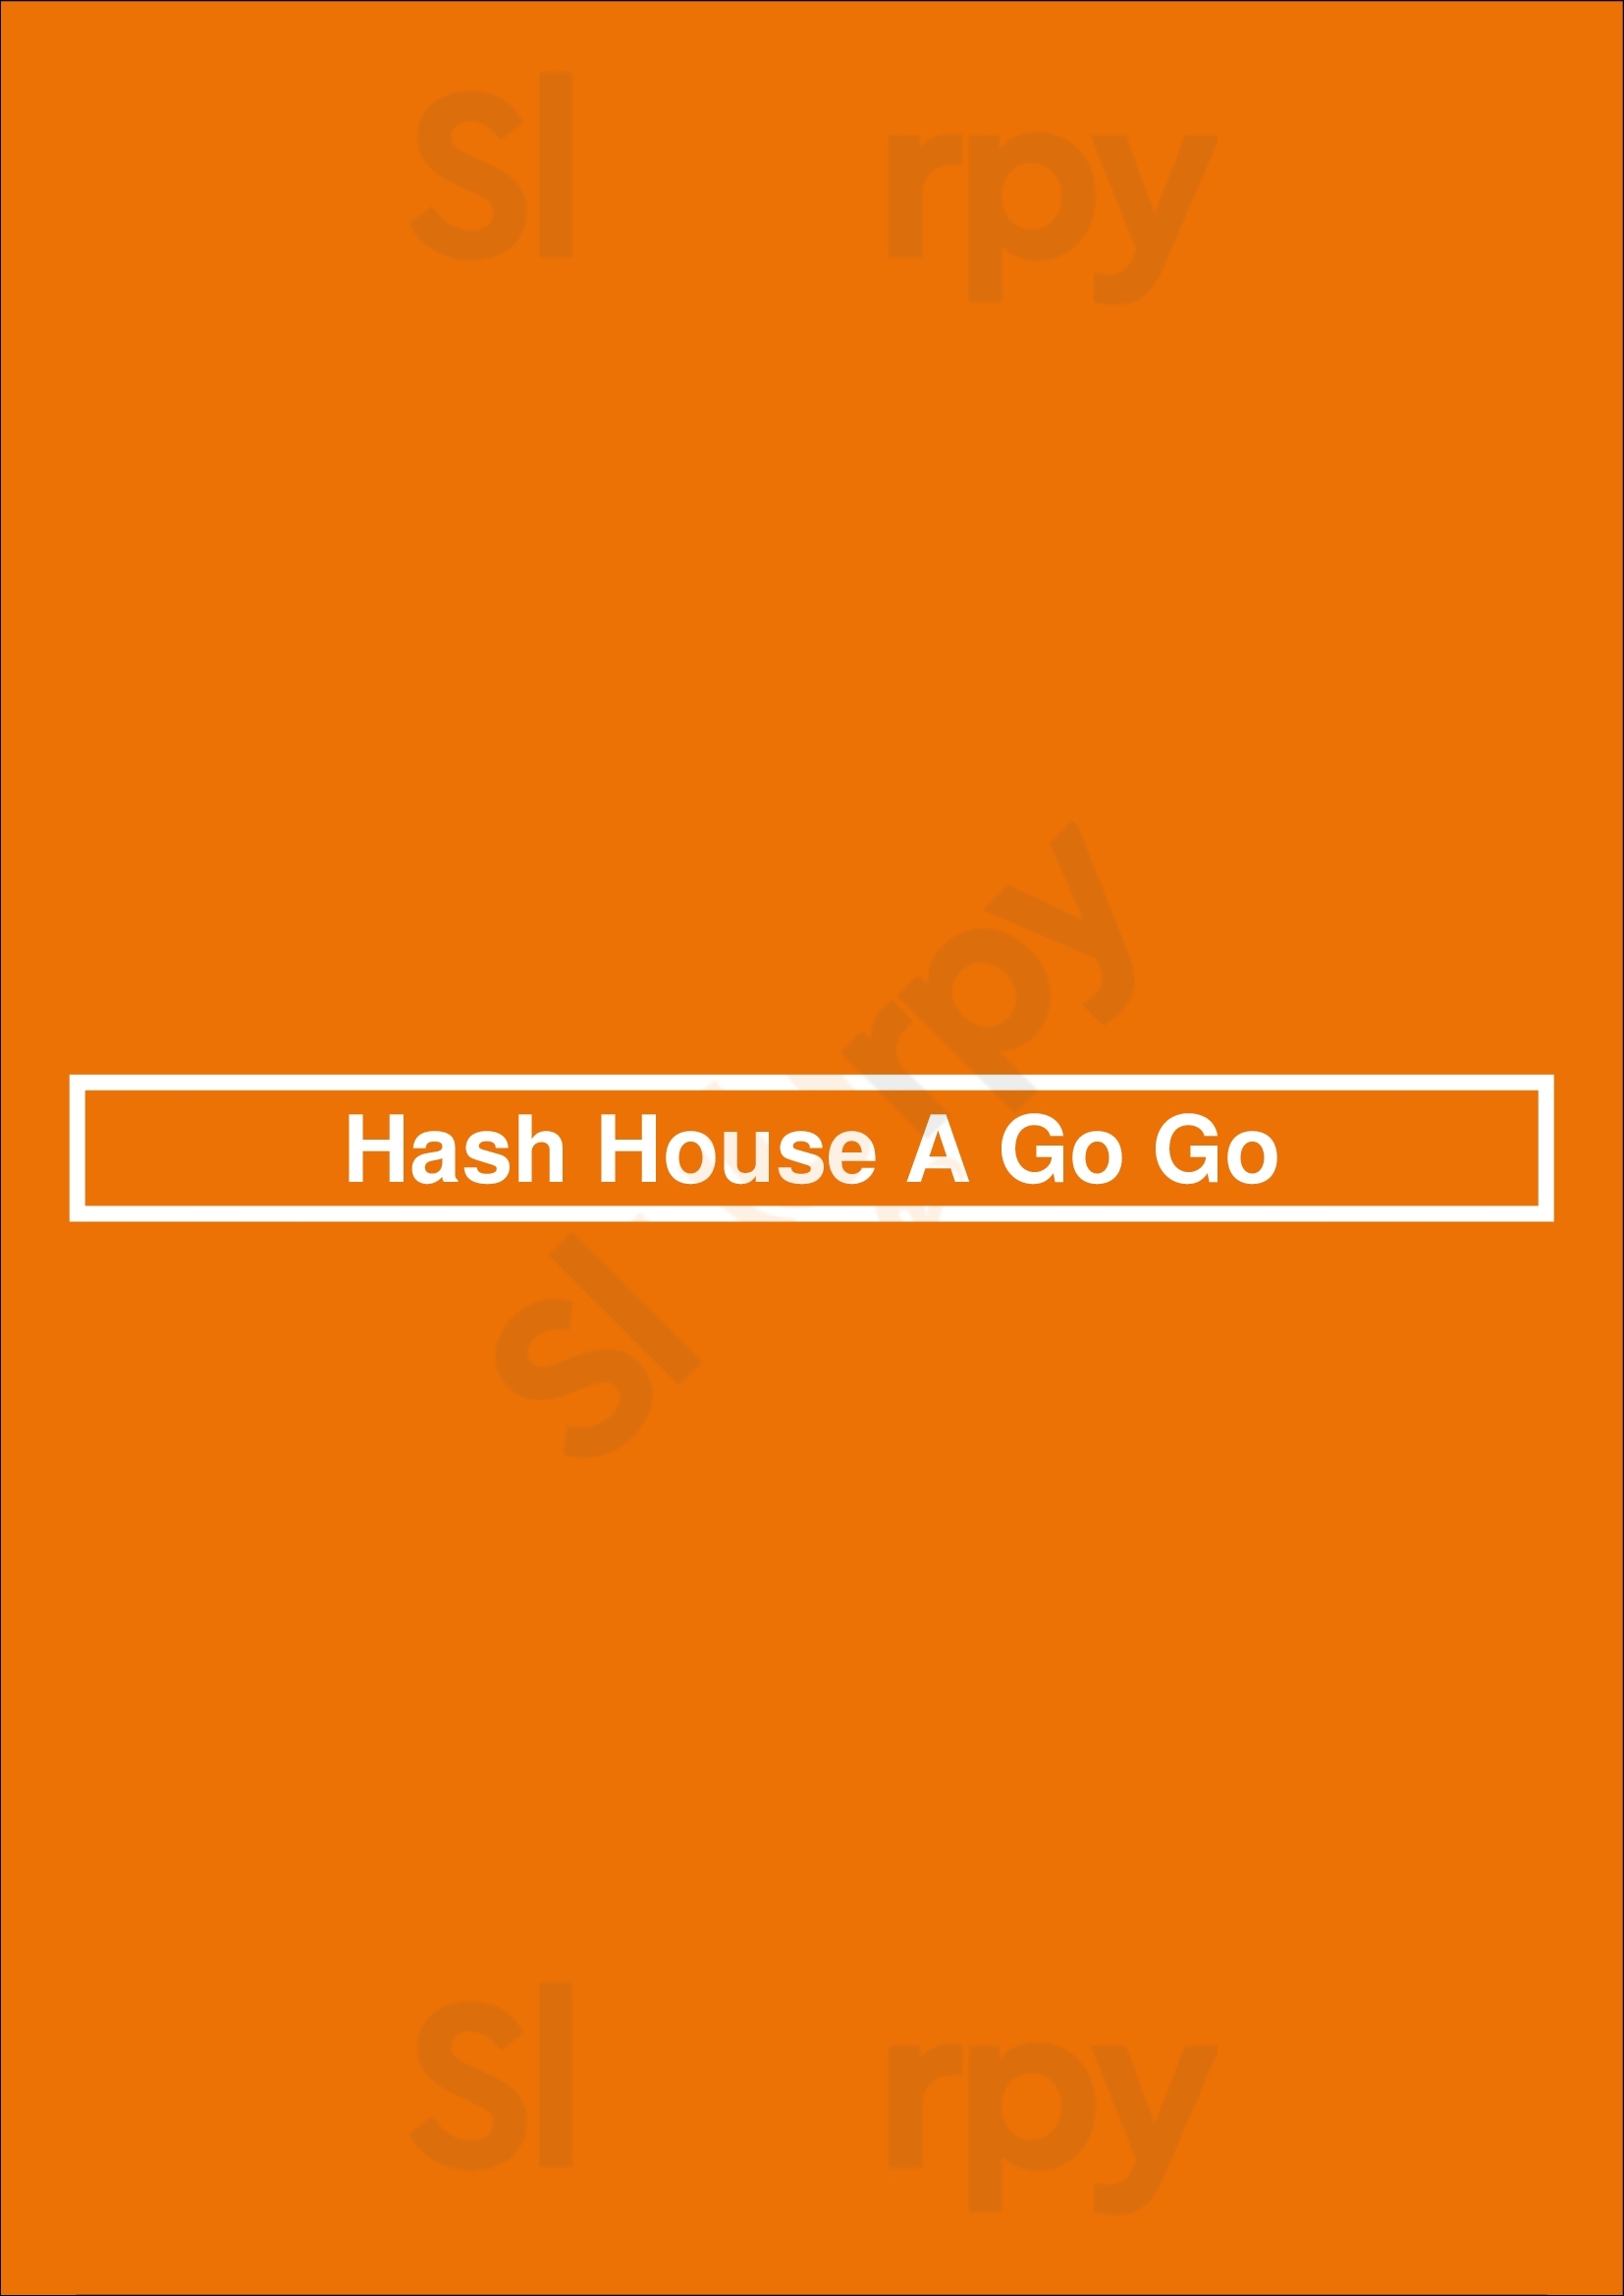 Hash House A Go Go Las Vegas Menu - 1